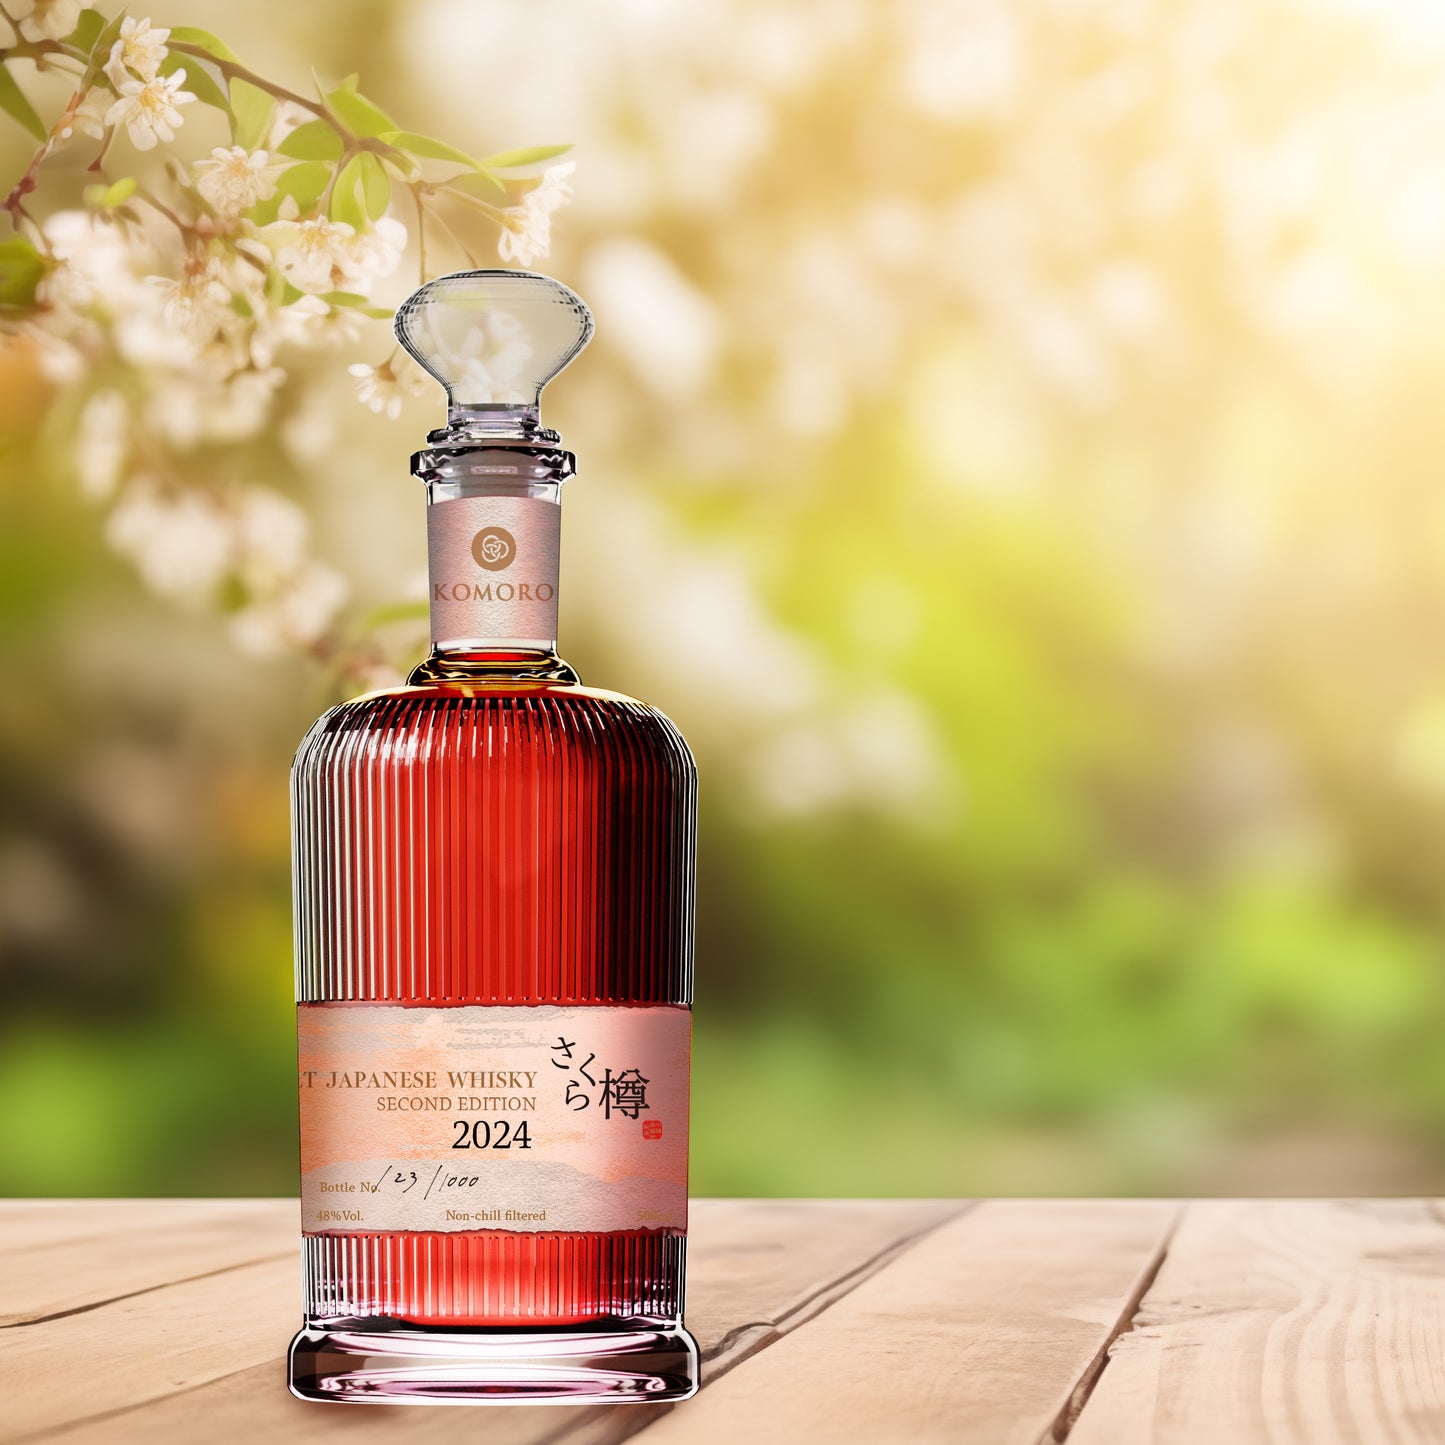 KOMORO Single Malt Japanese Whisky -Sakura Wood Matured 2024 SECOND EDITION-